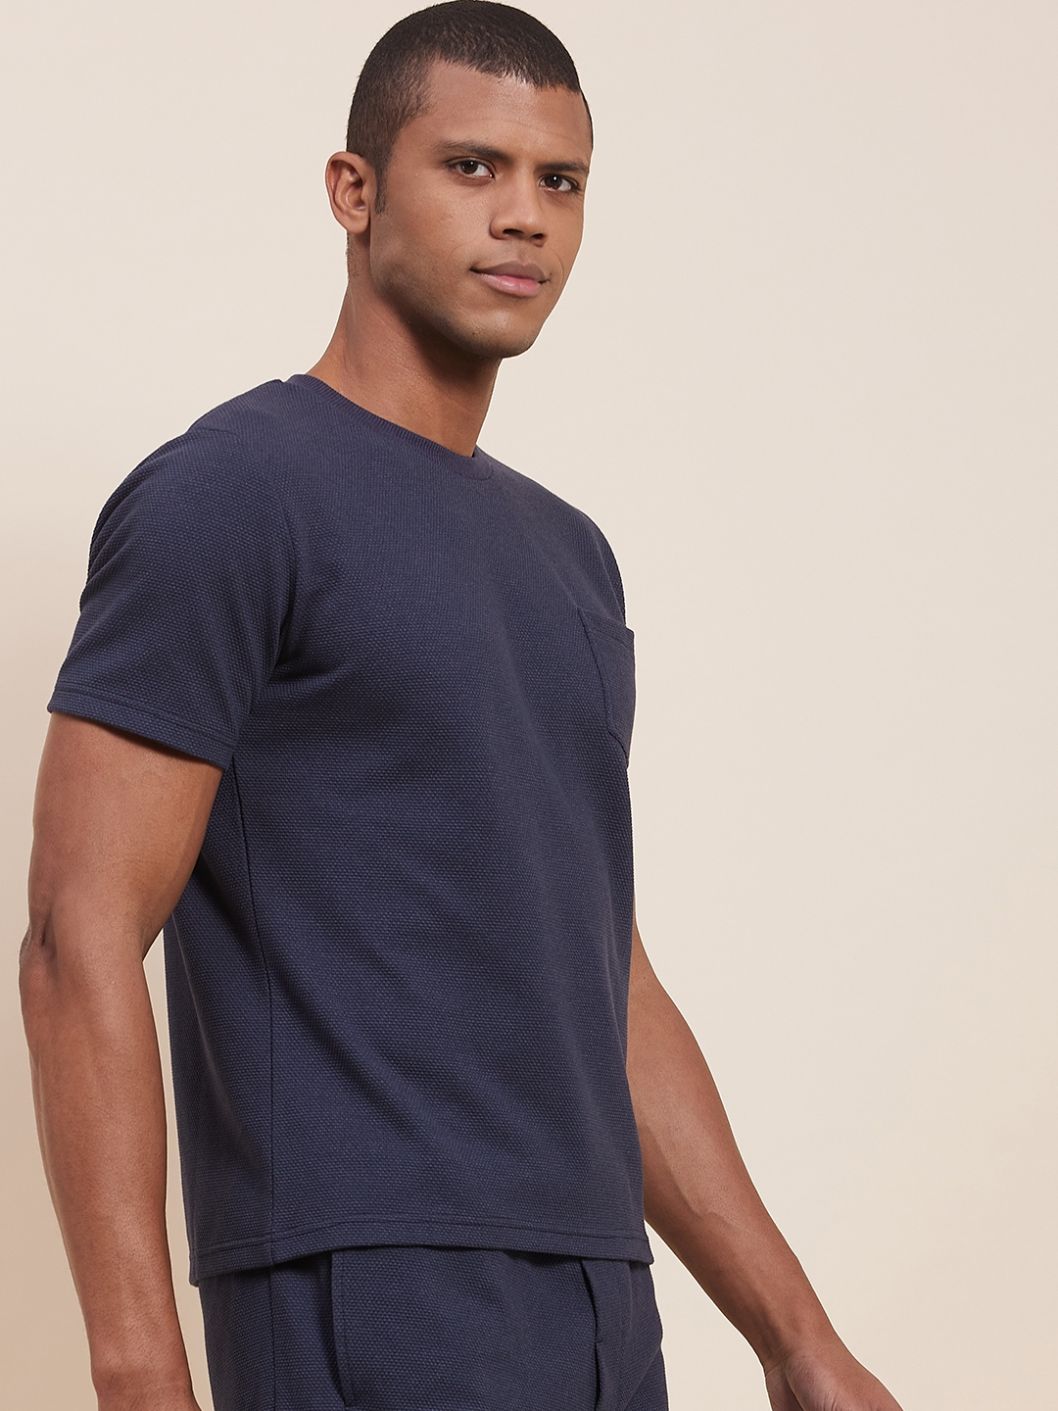 Men's Navy Slim Fit Pocket T-Shirt